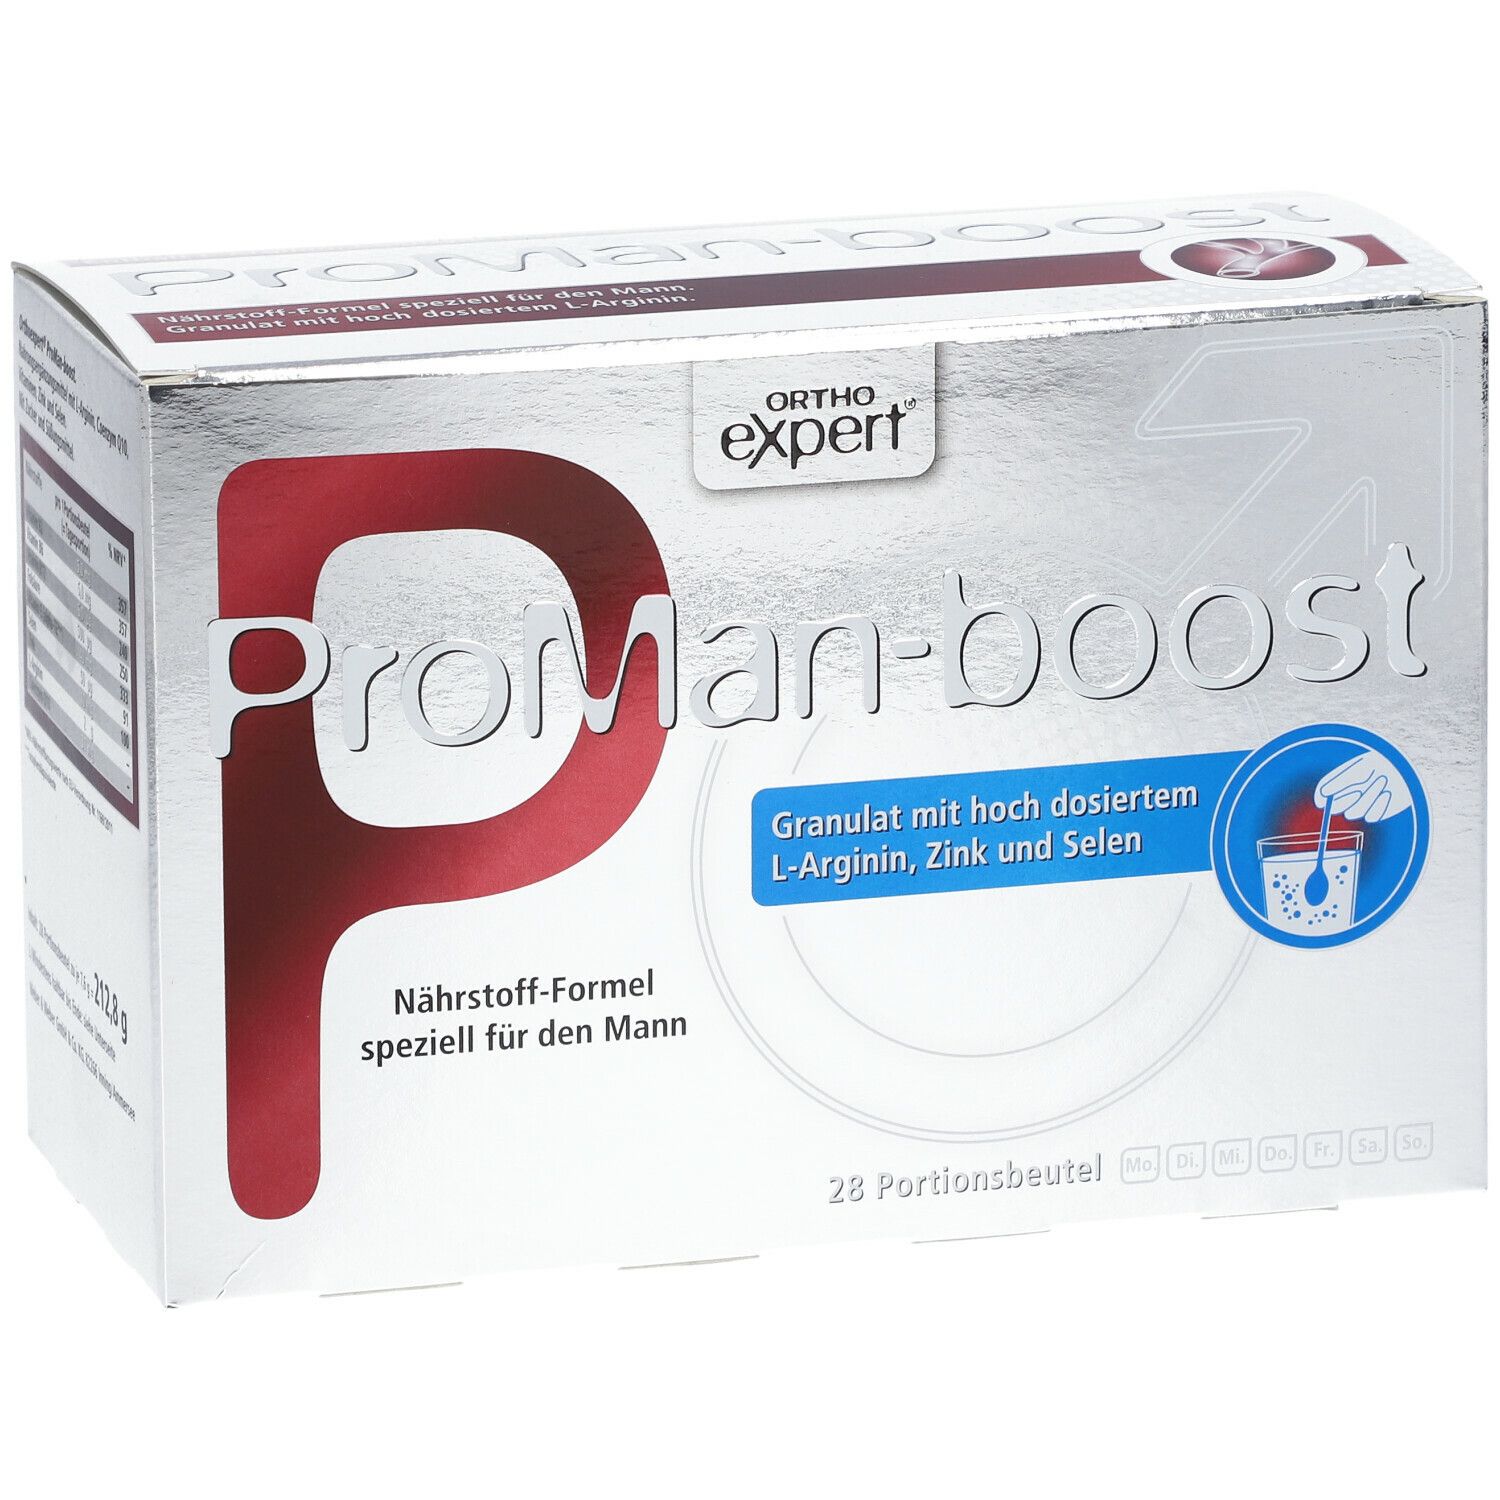 Orthoexpert® ProMan-boost